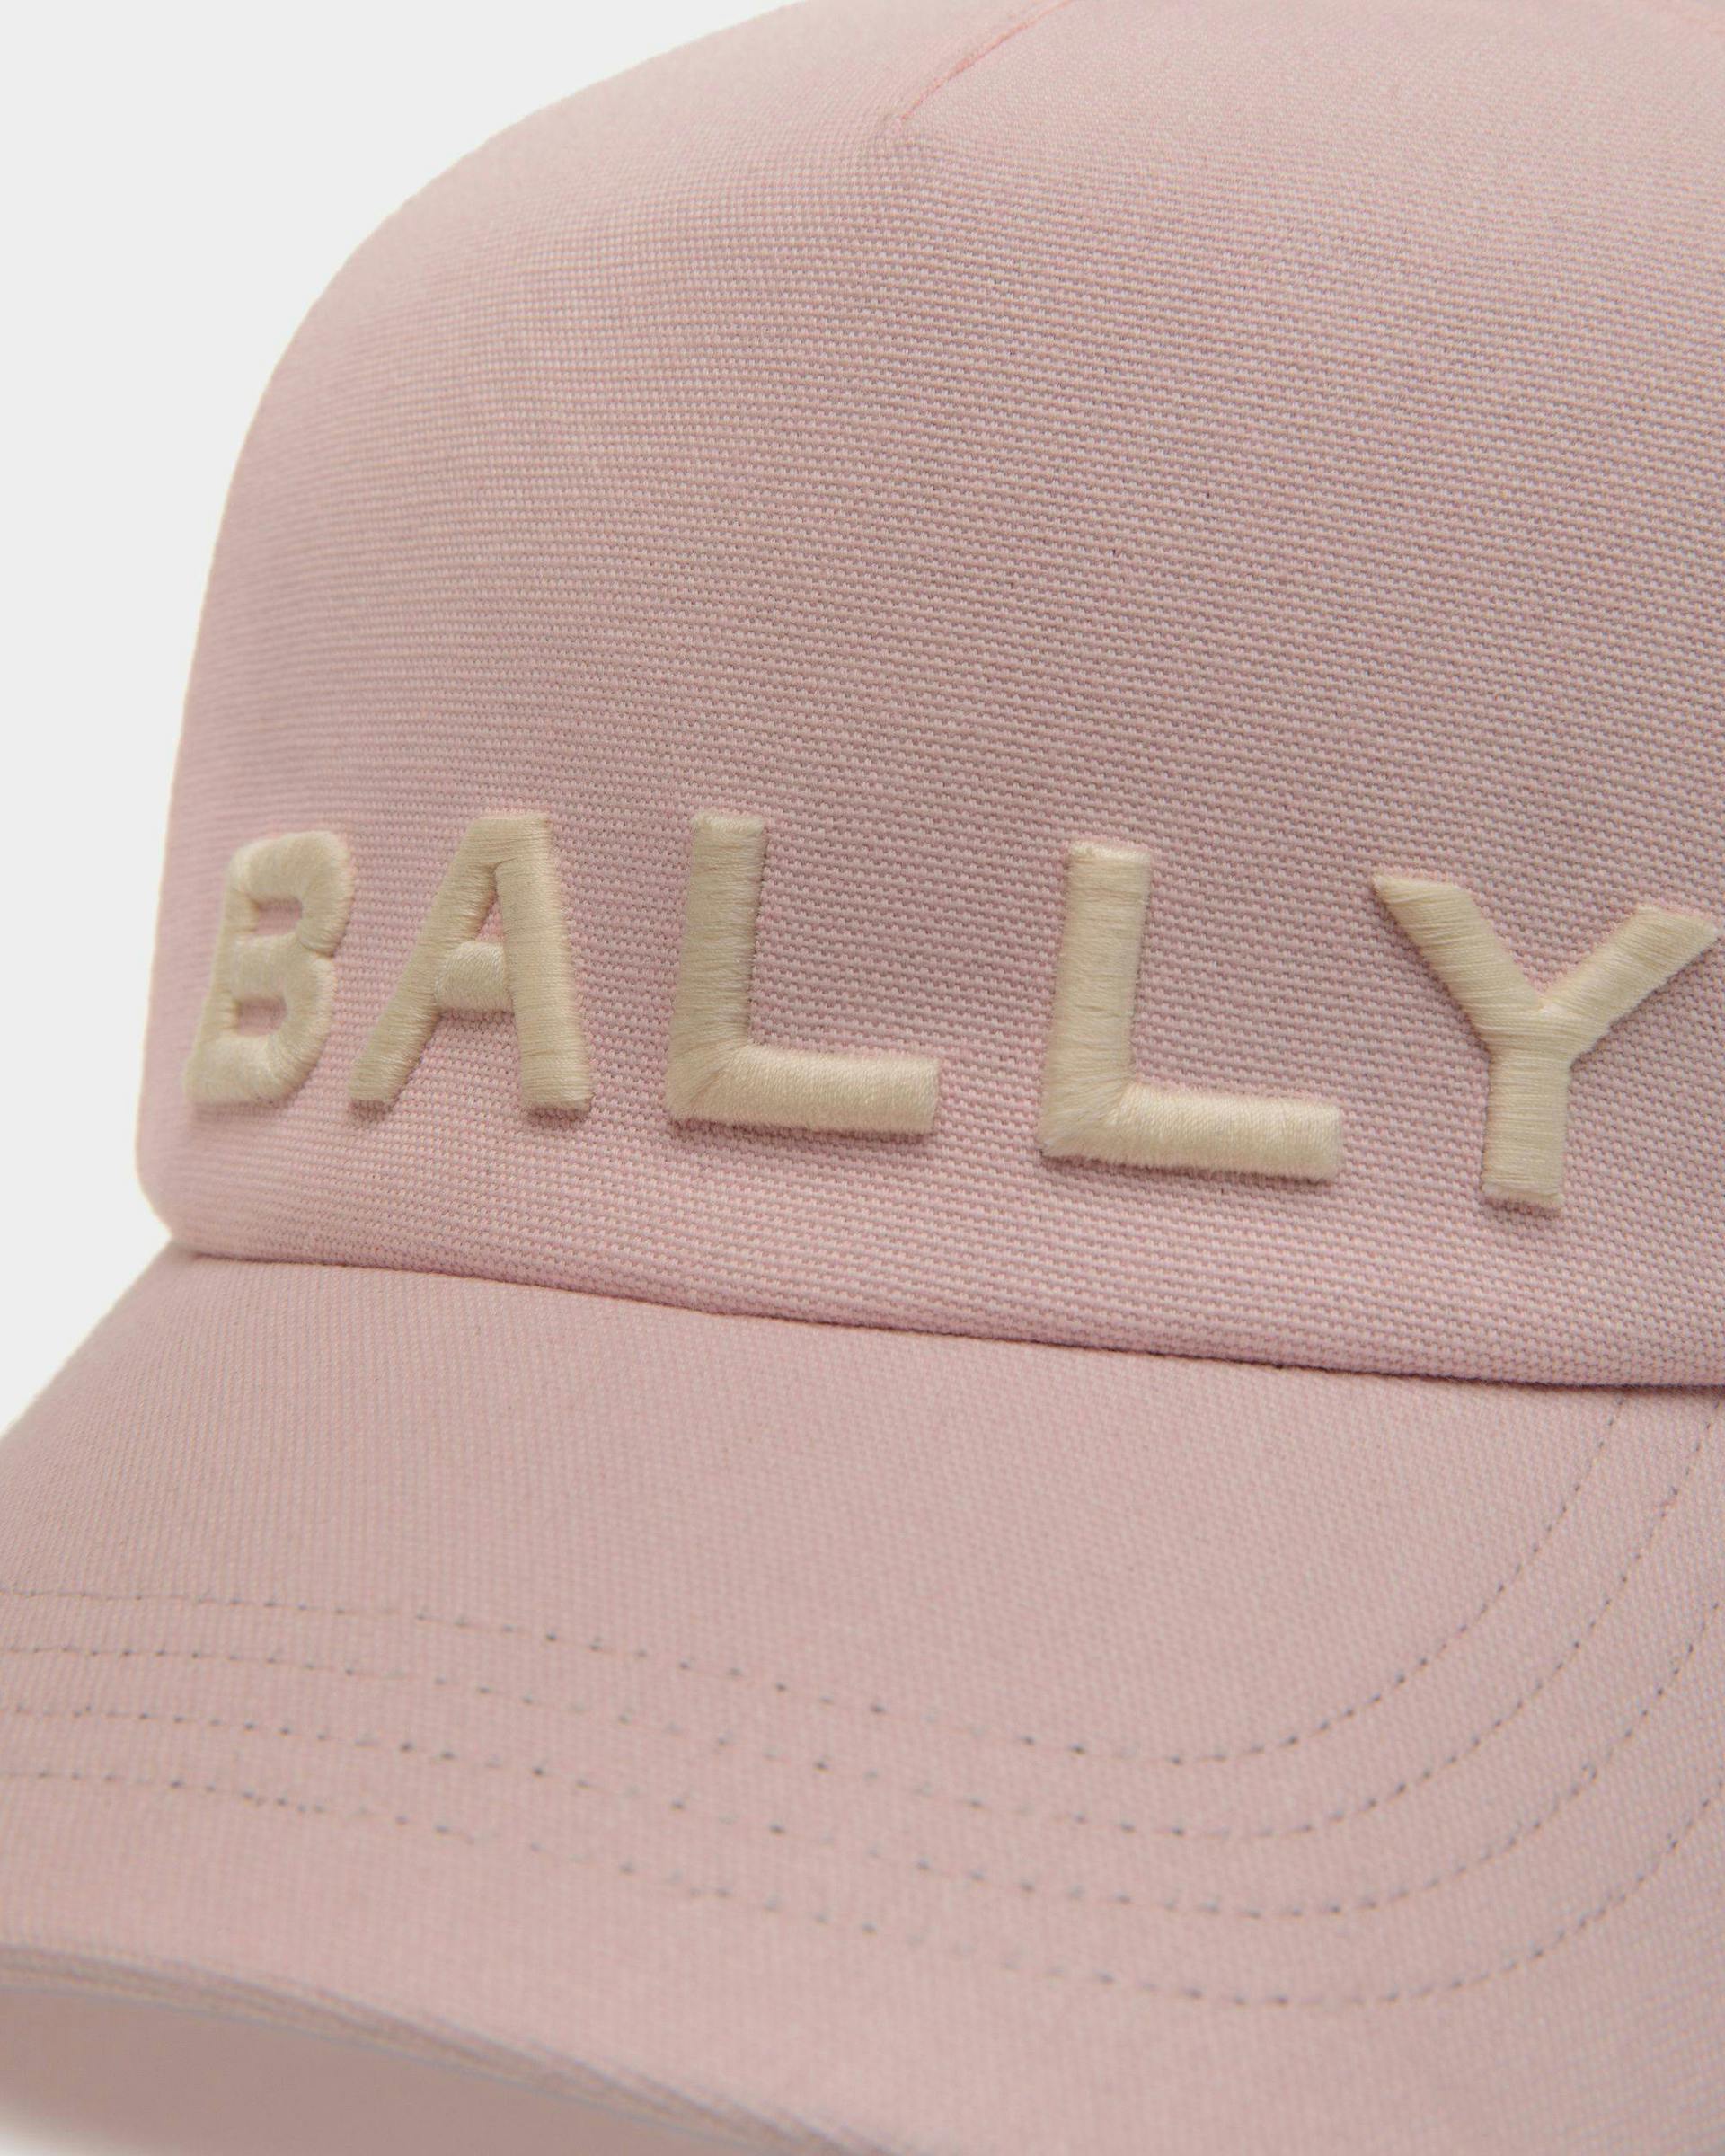 Women's Baseball Hat in Pink Cotton | Bally | Still Life Detail